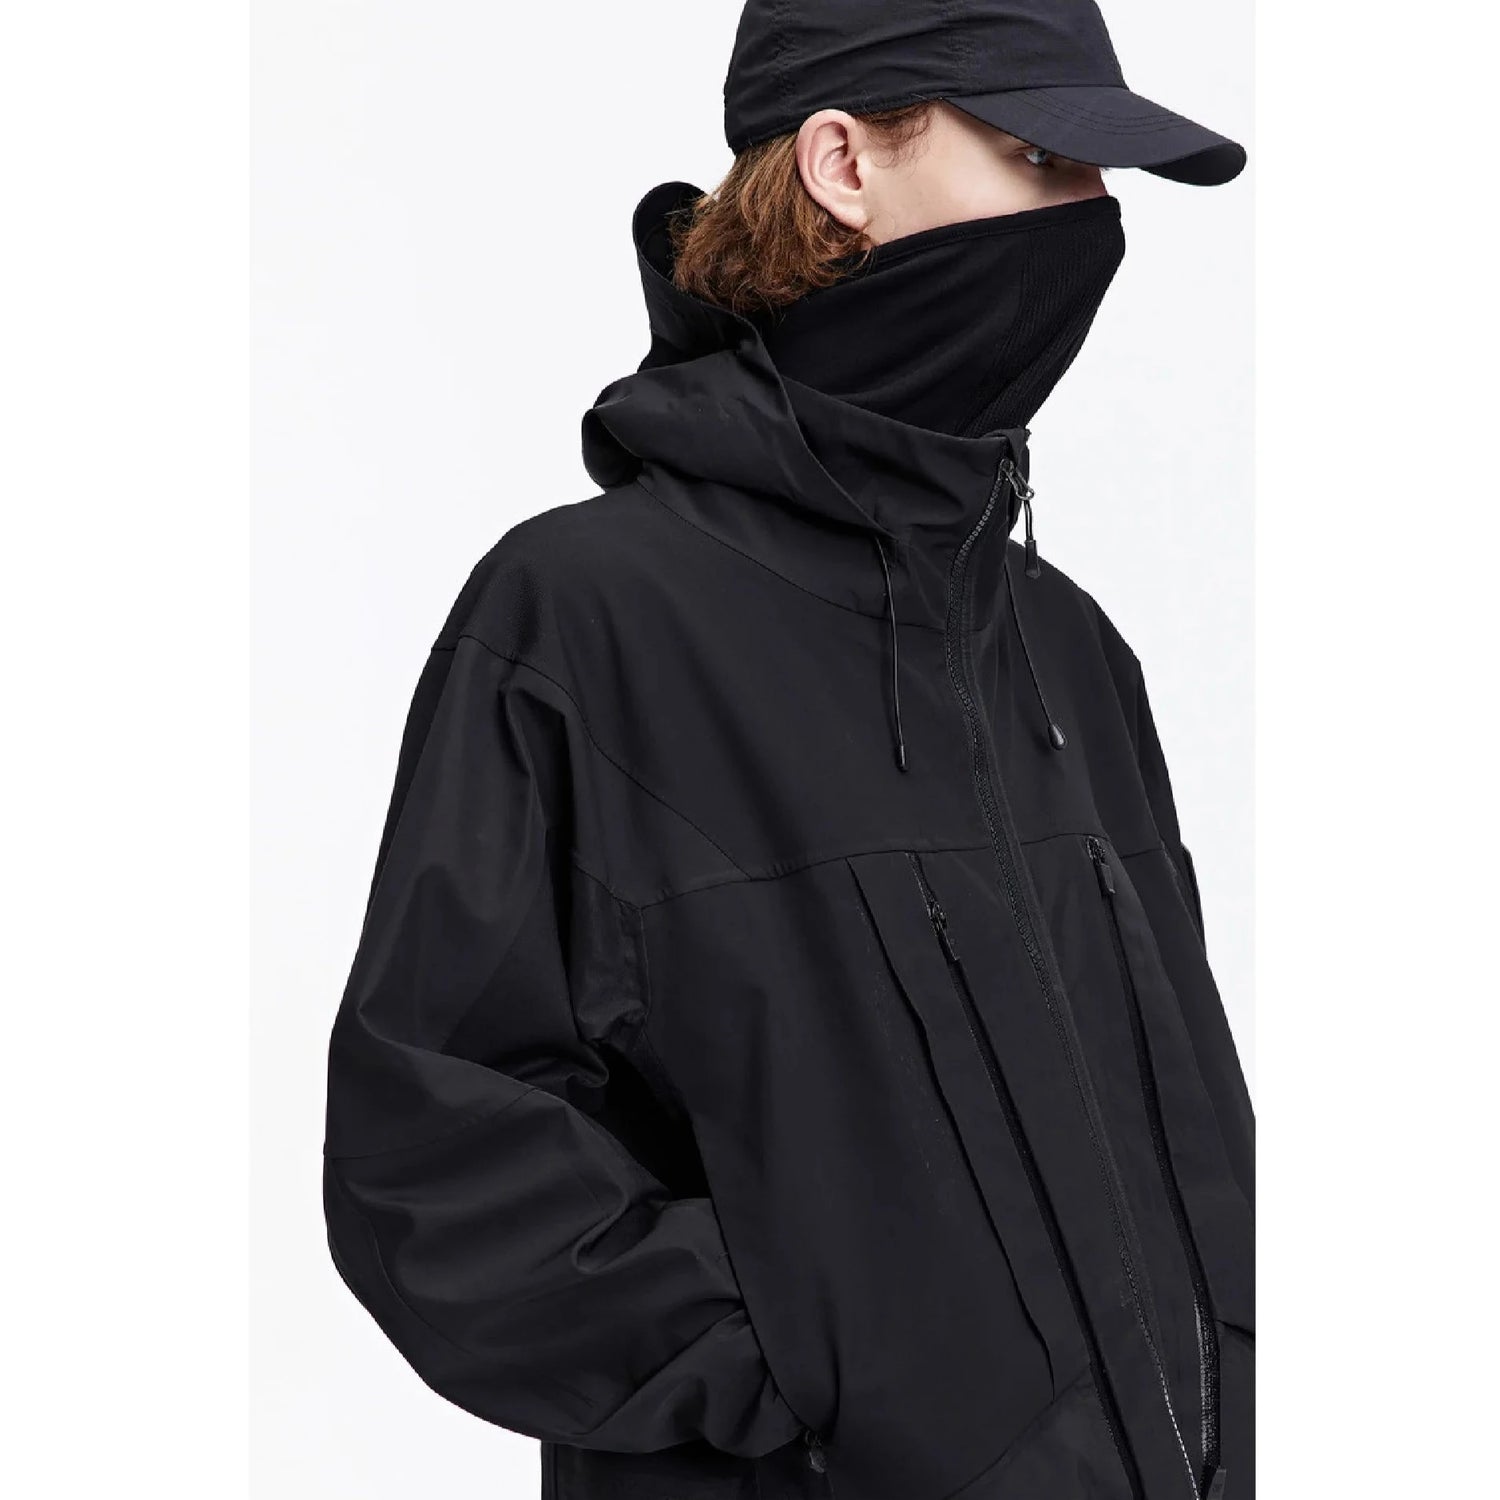 A man wearing The 0107 Ski Down Techwear Jacket in Black Color